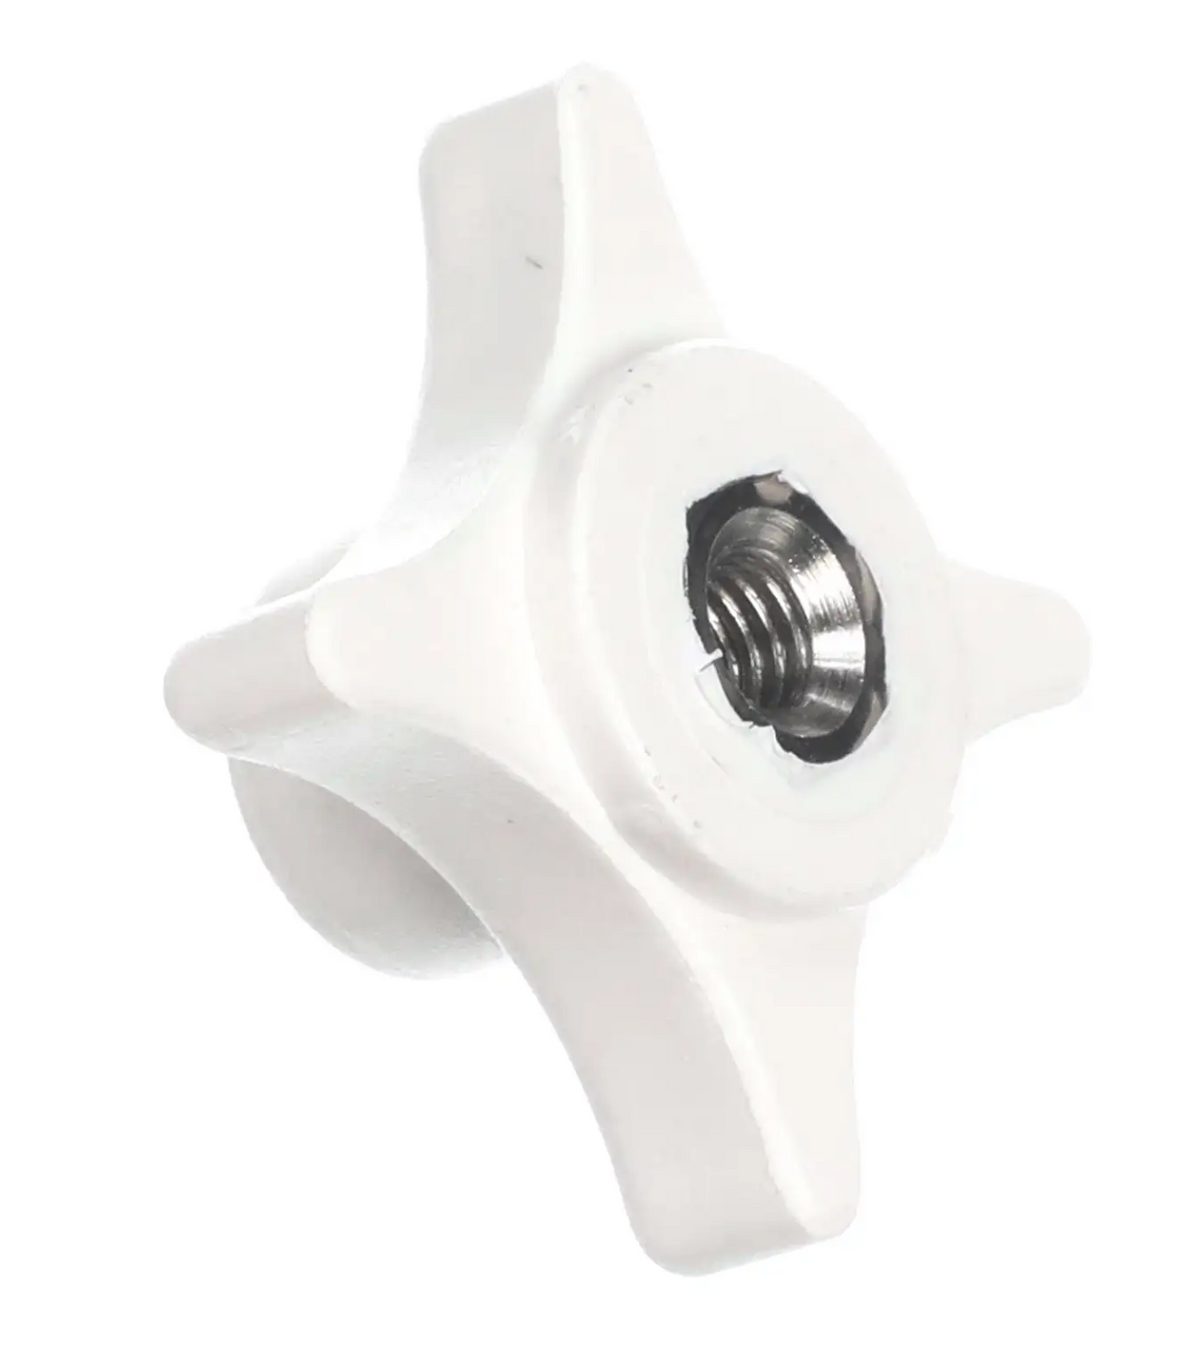 Crathco-SPM Auger Spiral Knob, WHITE, 2 Pieces